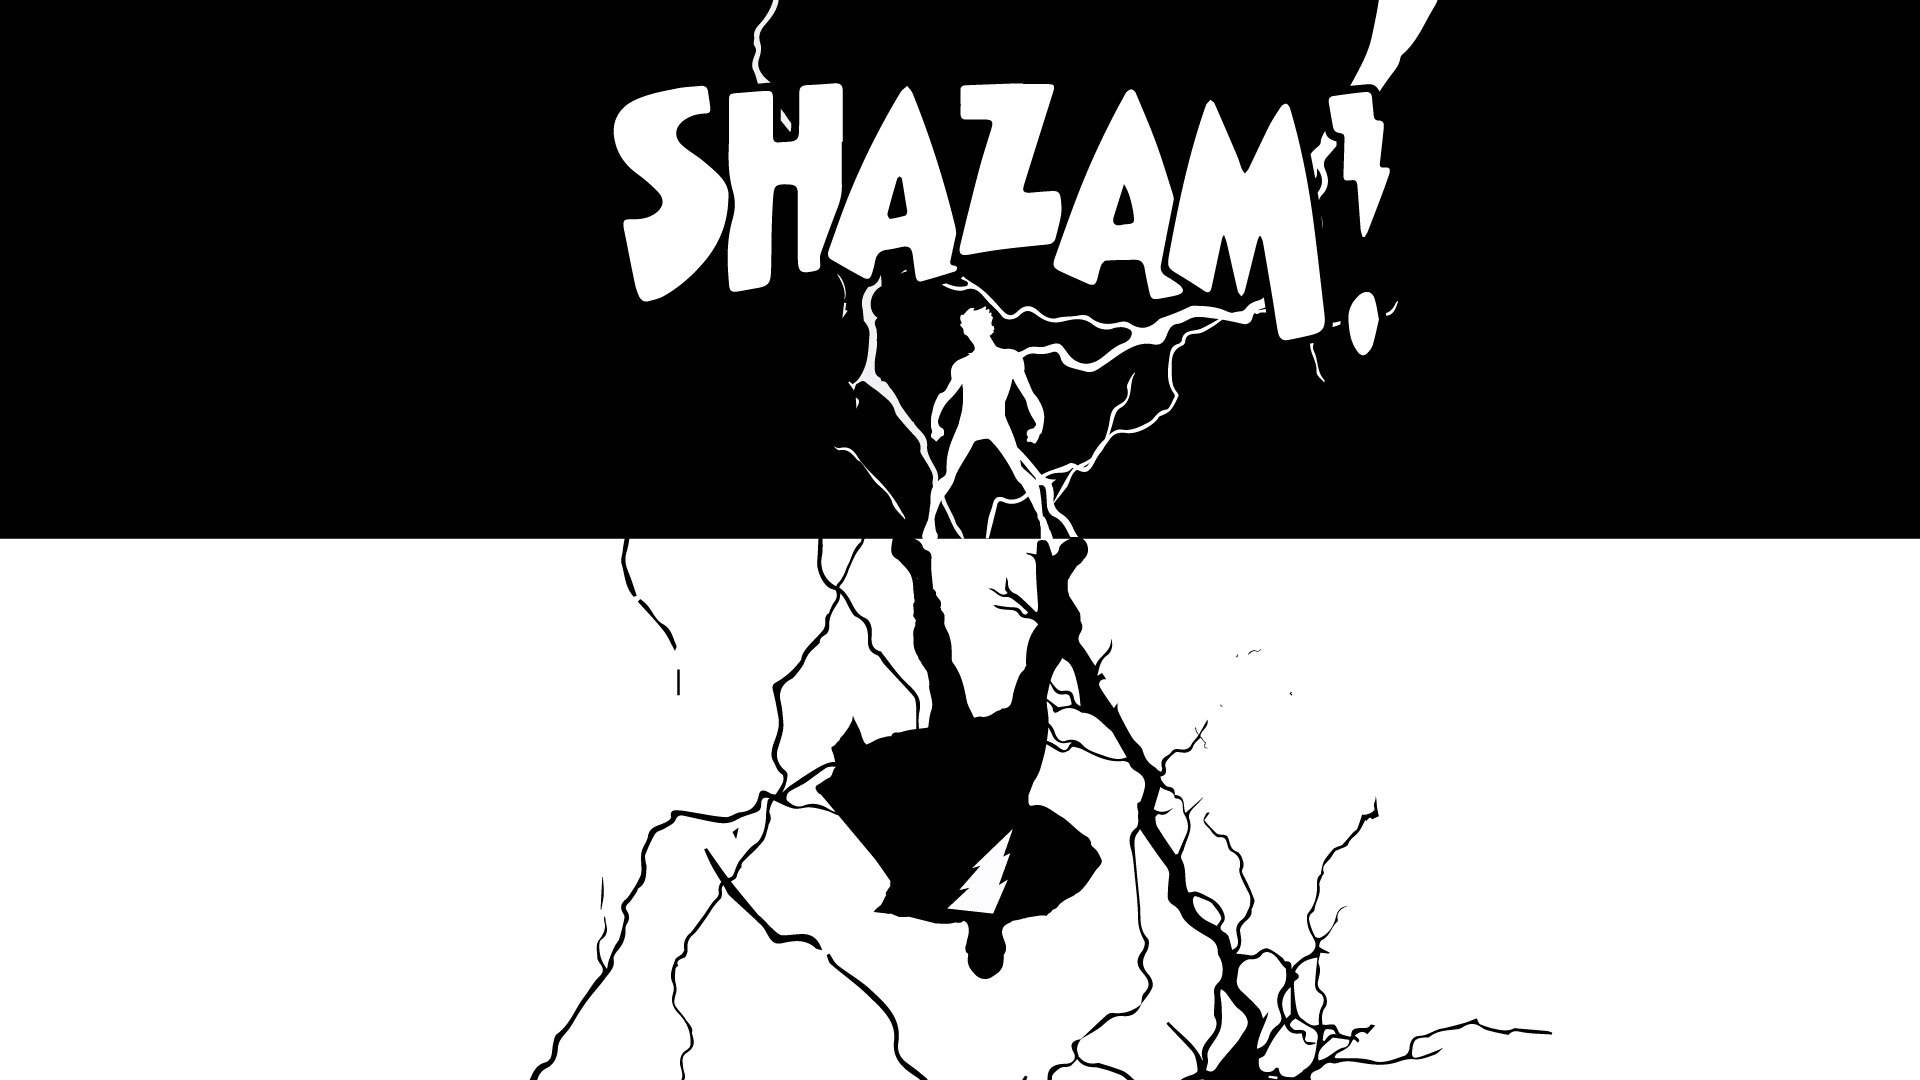 شزم - کمپانی دی سی کامیکس - shazam - dc comics